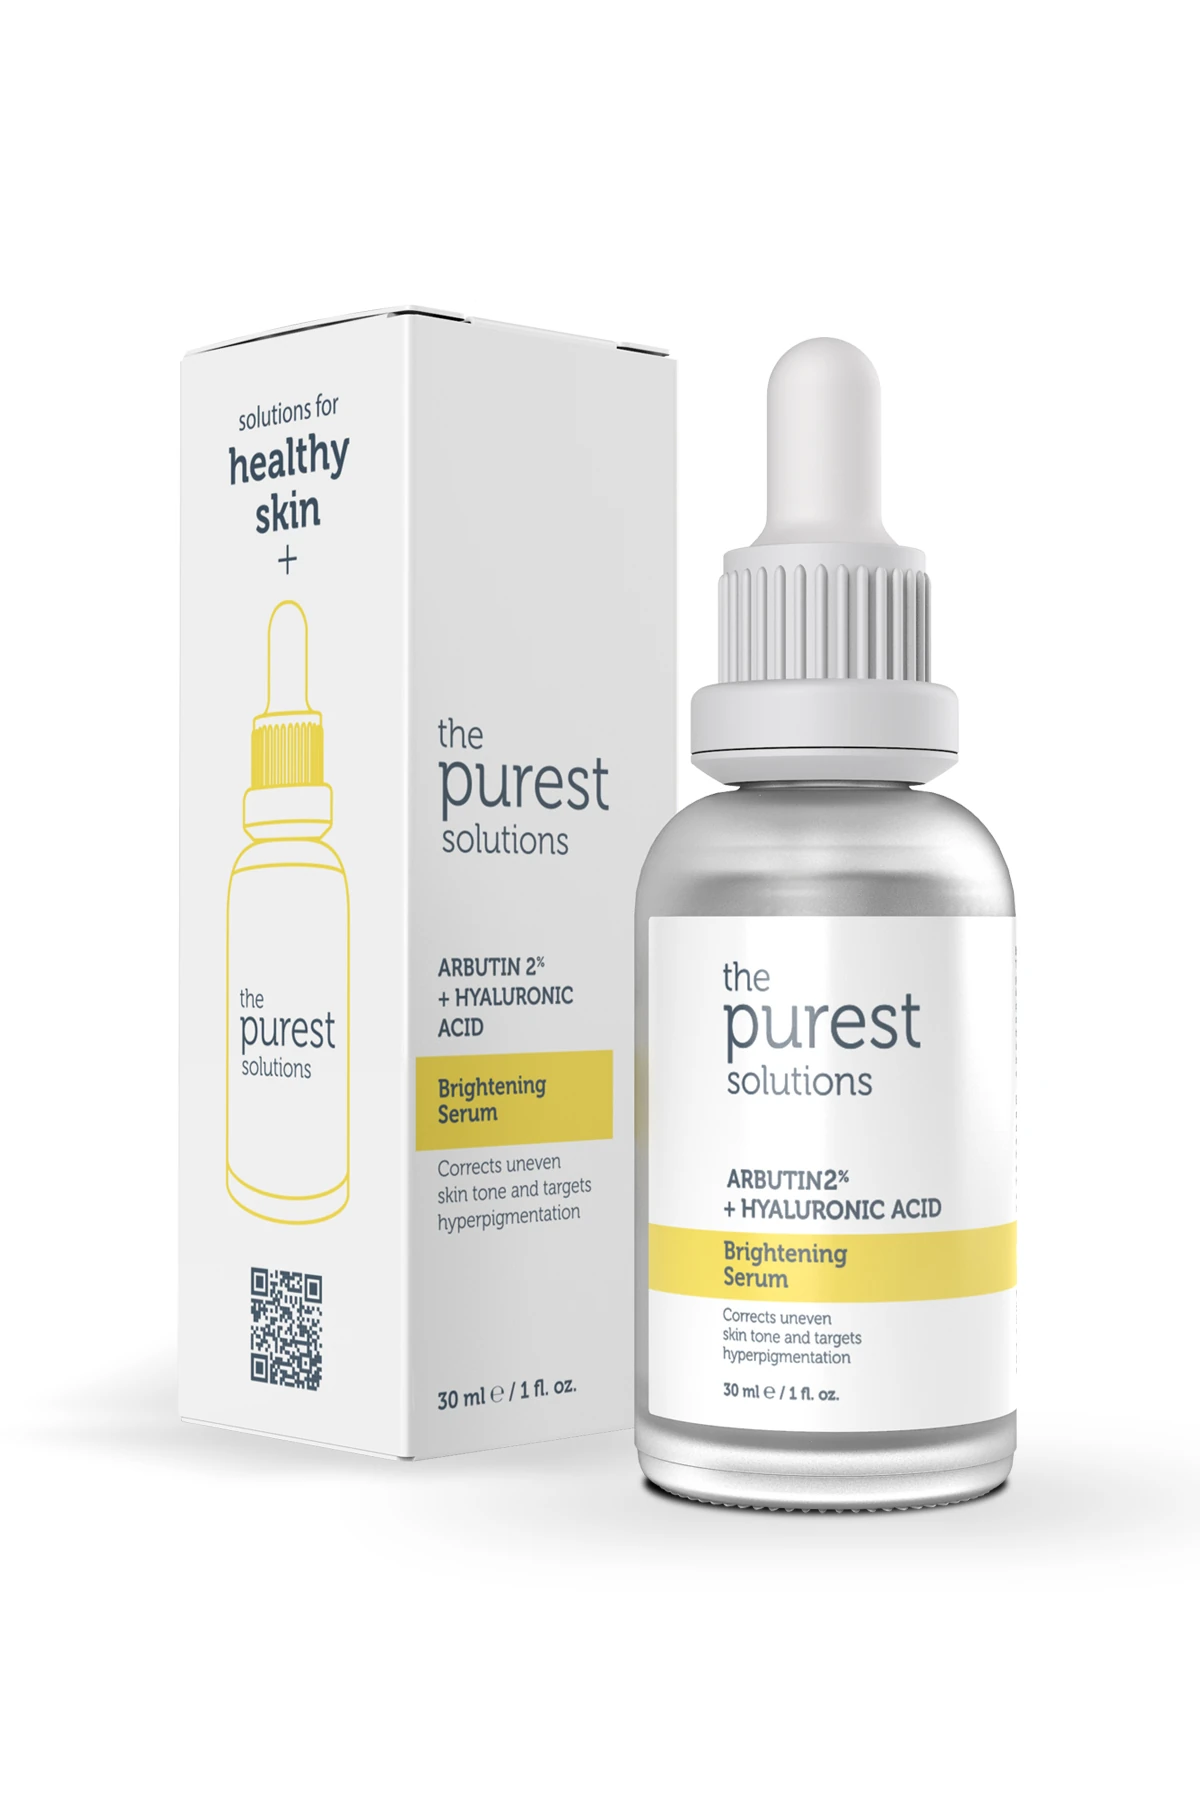 The purset solutions Skin Tone Equalizing Skin Care Serum 30 ml - 2